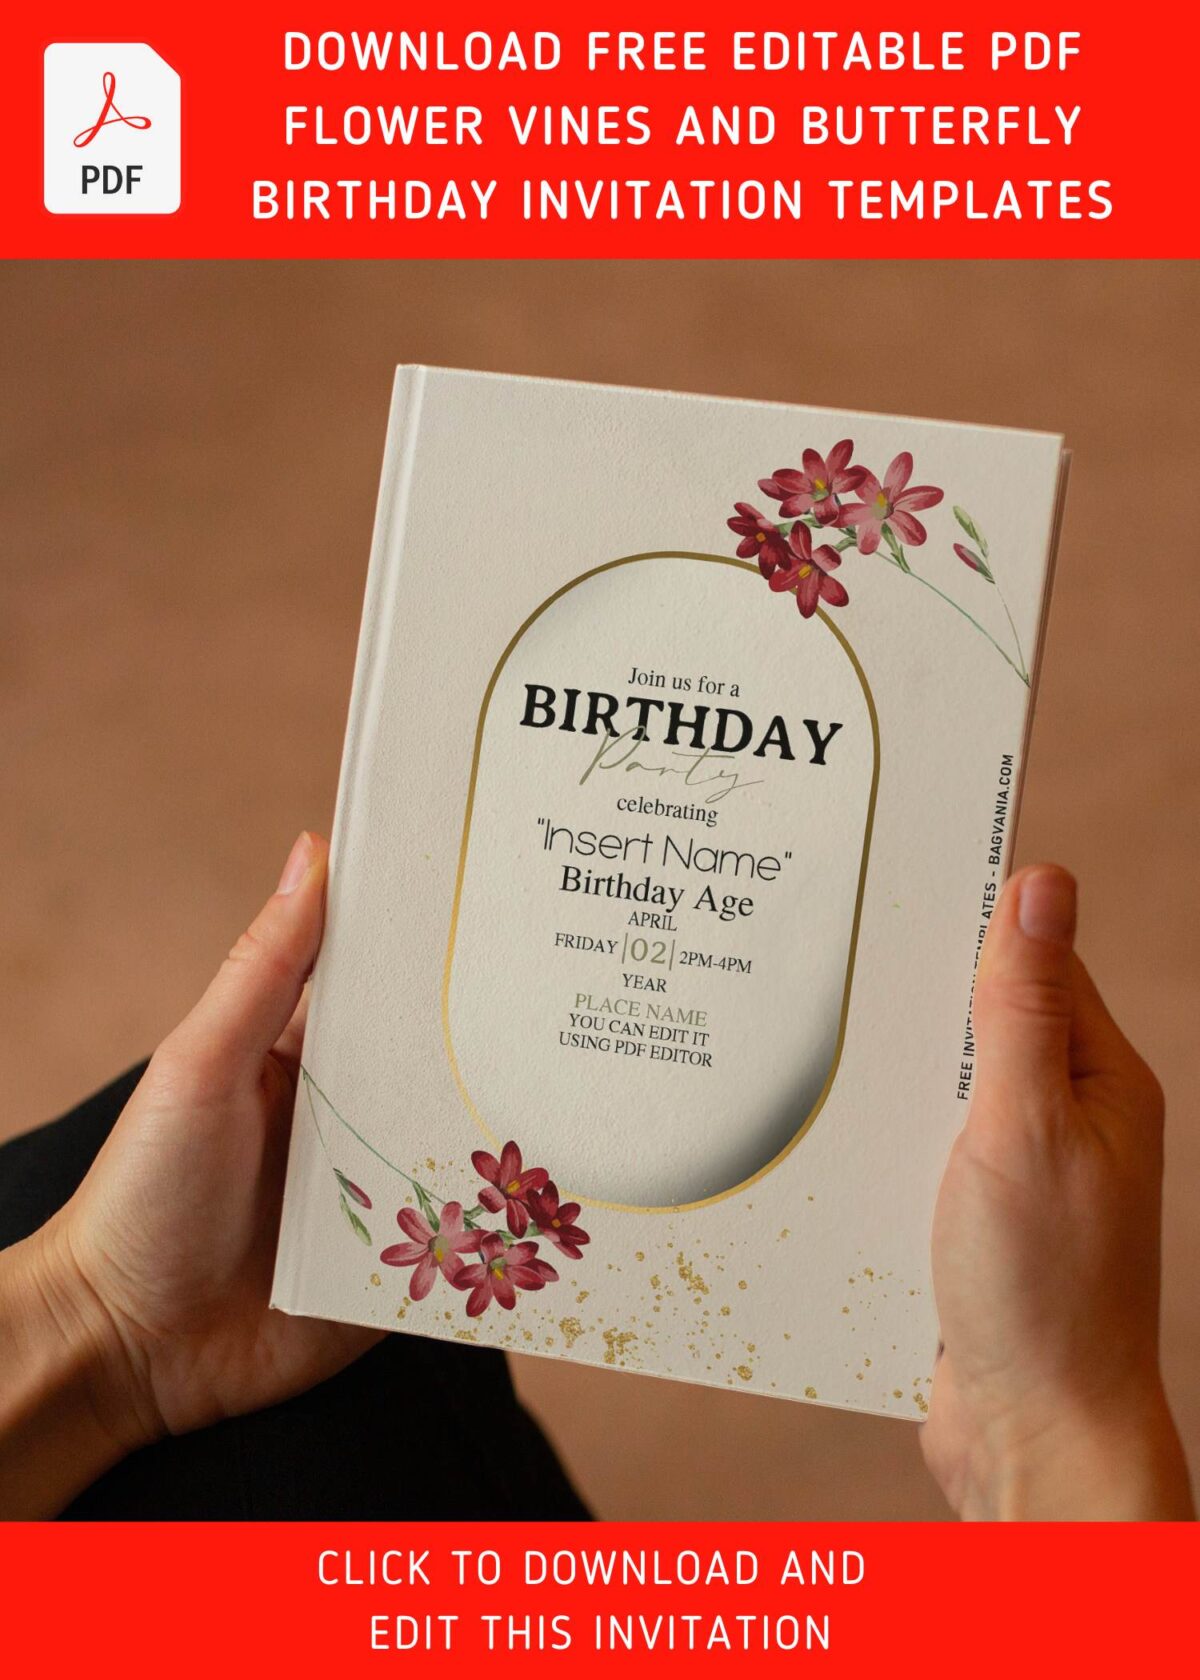 (Free Editable PDF) Butterfly Garden Birthday Invitation Templates with editable text